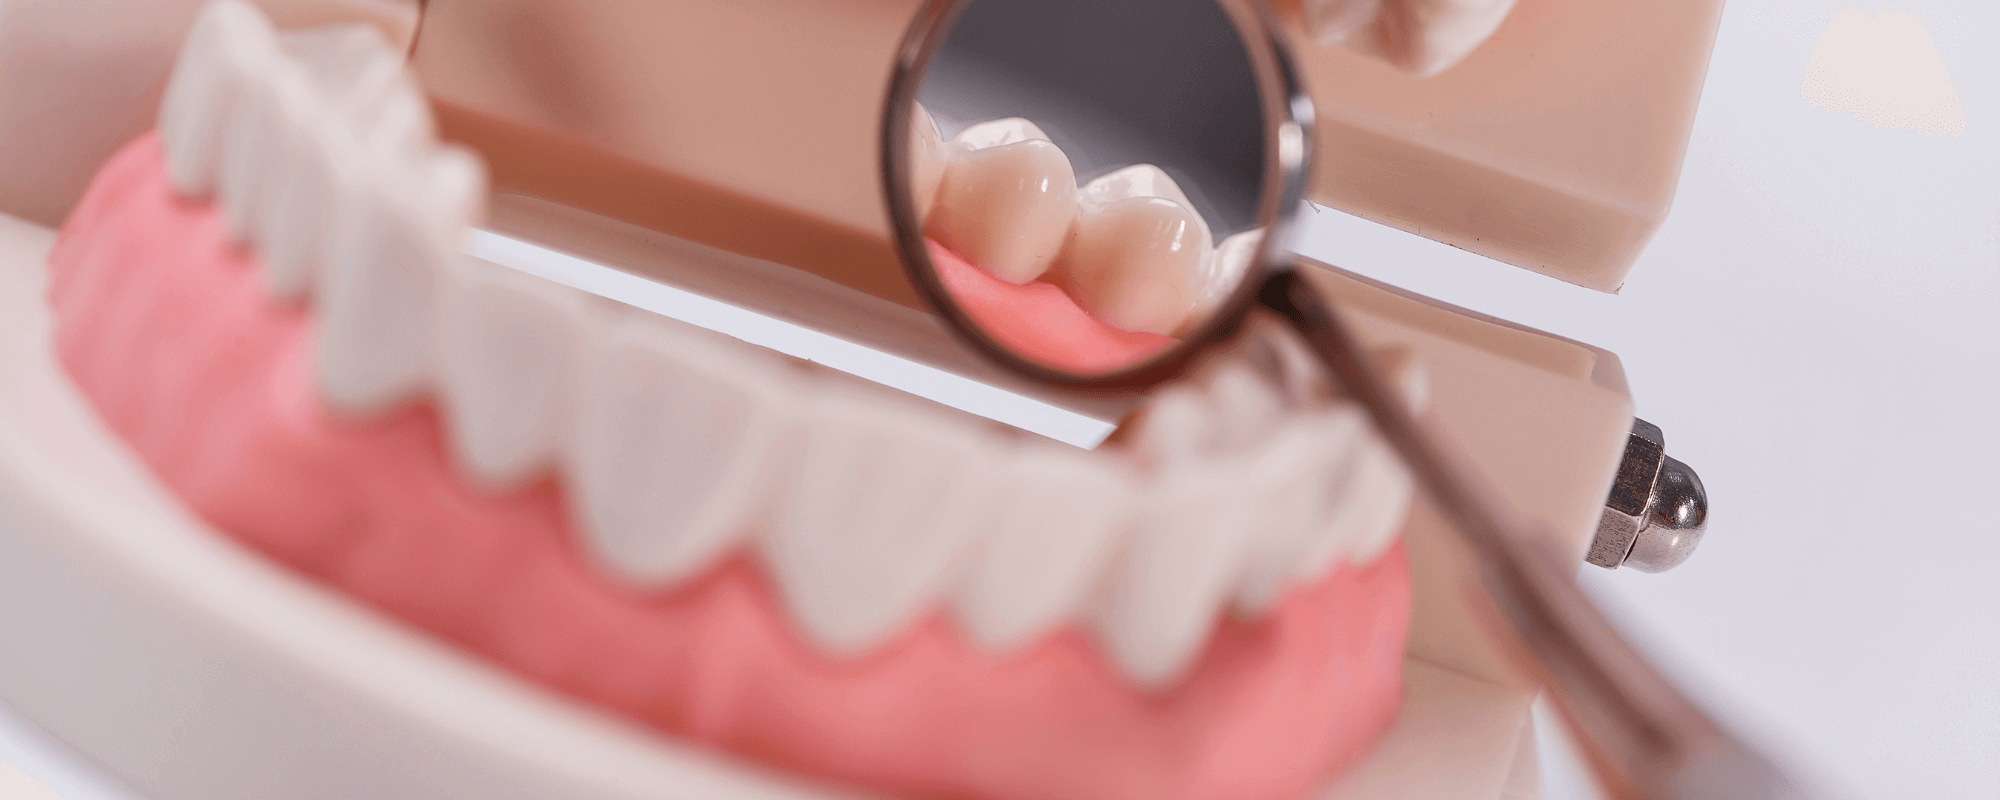 Close up of a dental implant model